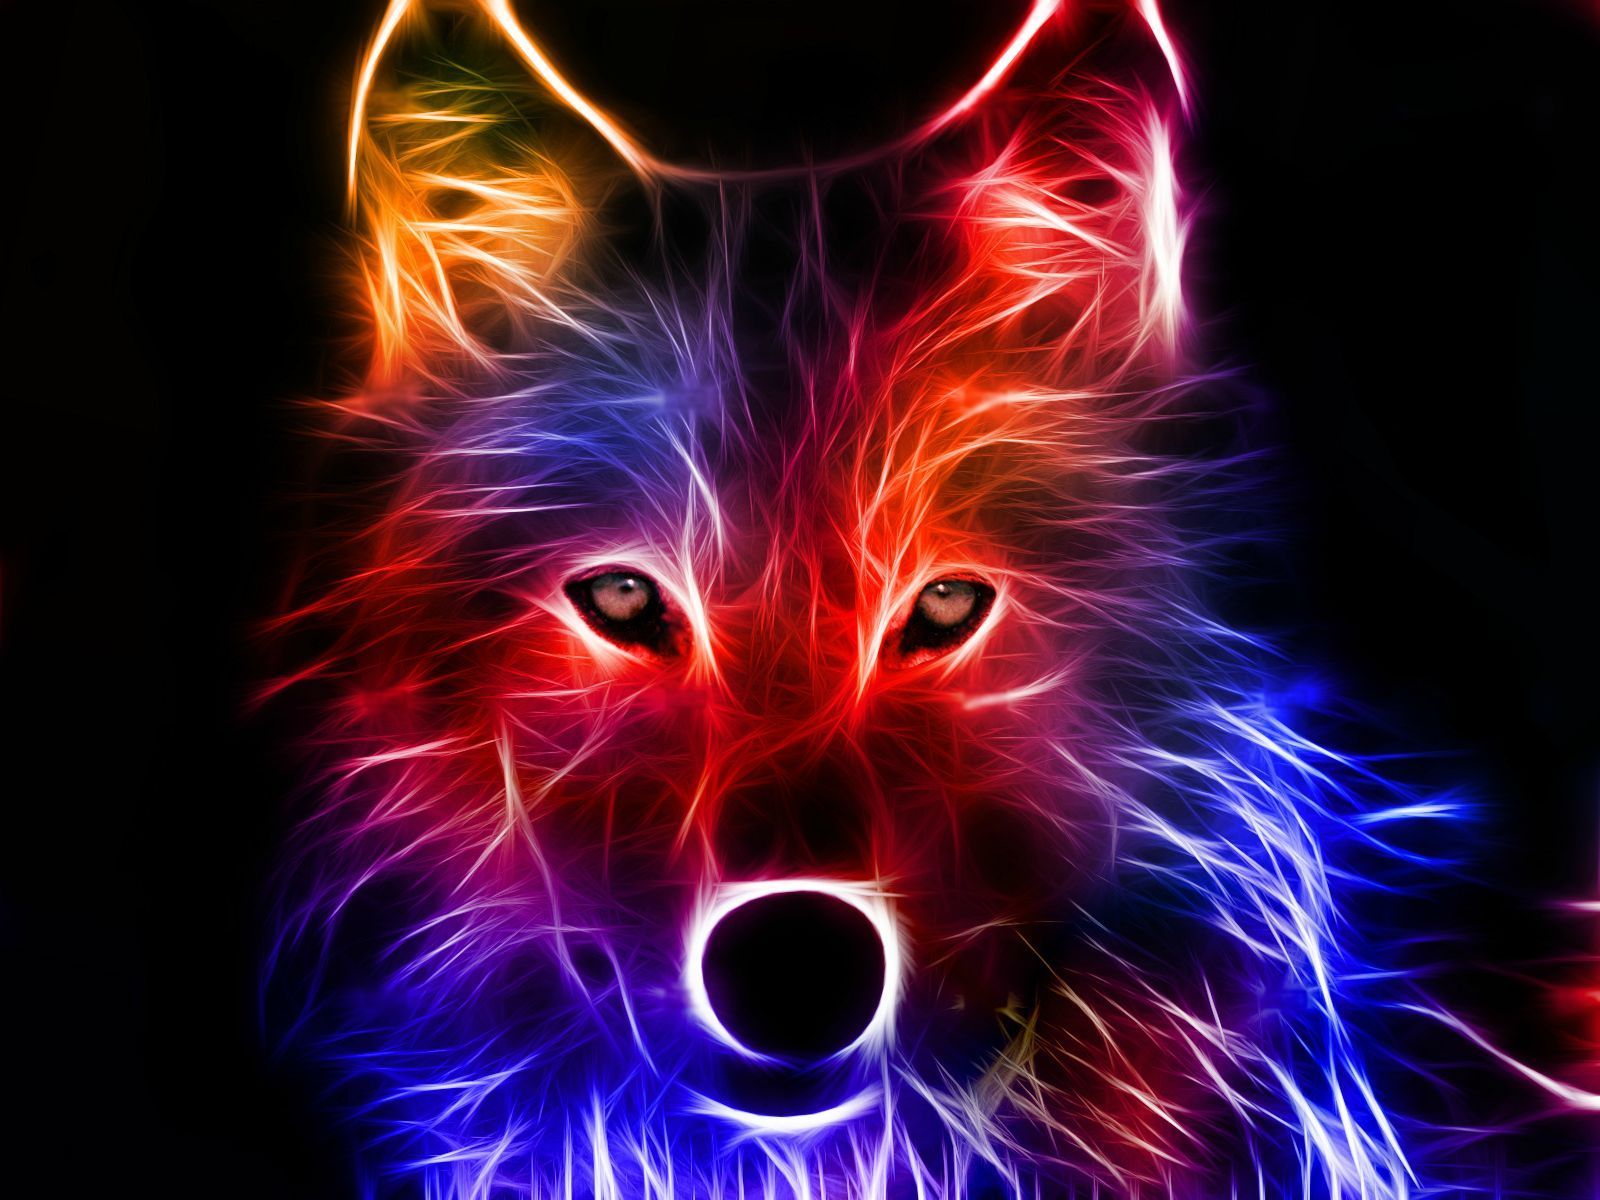 Colorful fox HD 3D wallpaper image. Free wide wallpaper download. Free Desktop BackgroundFree Desktop Backgr. Wolf wallpaper, Animal wallpaper, Wolf picture